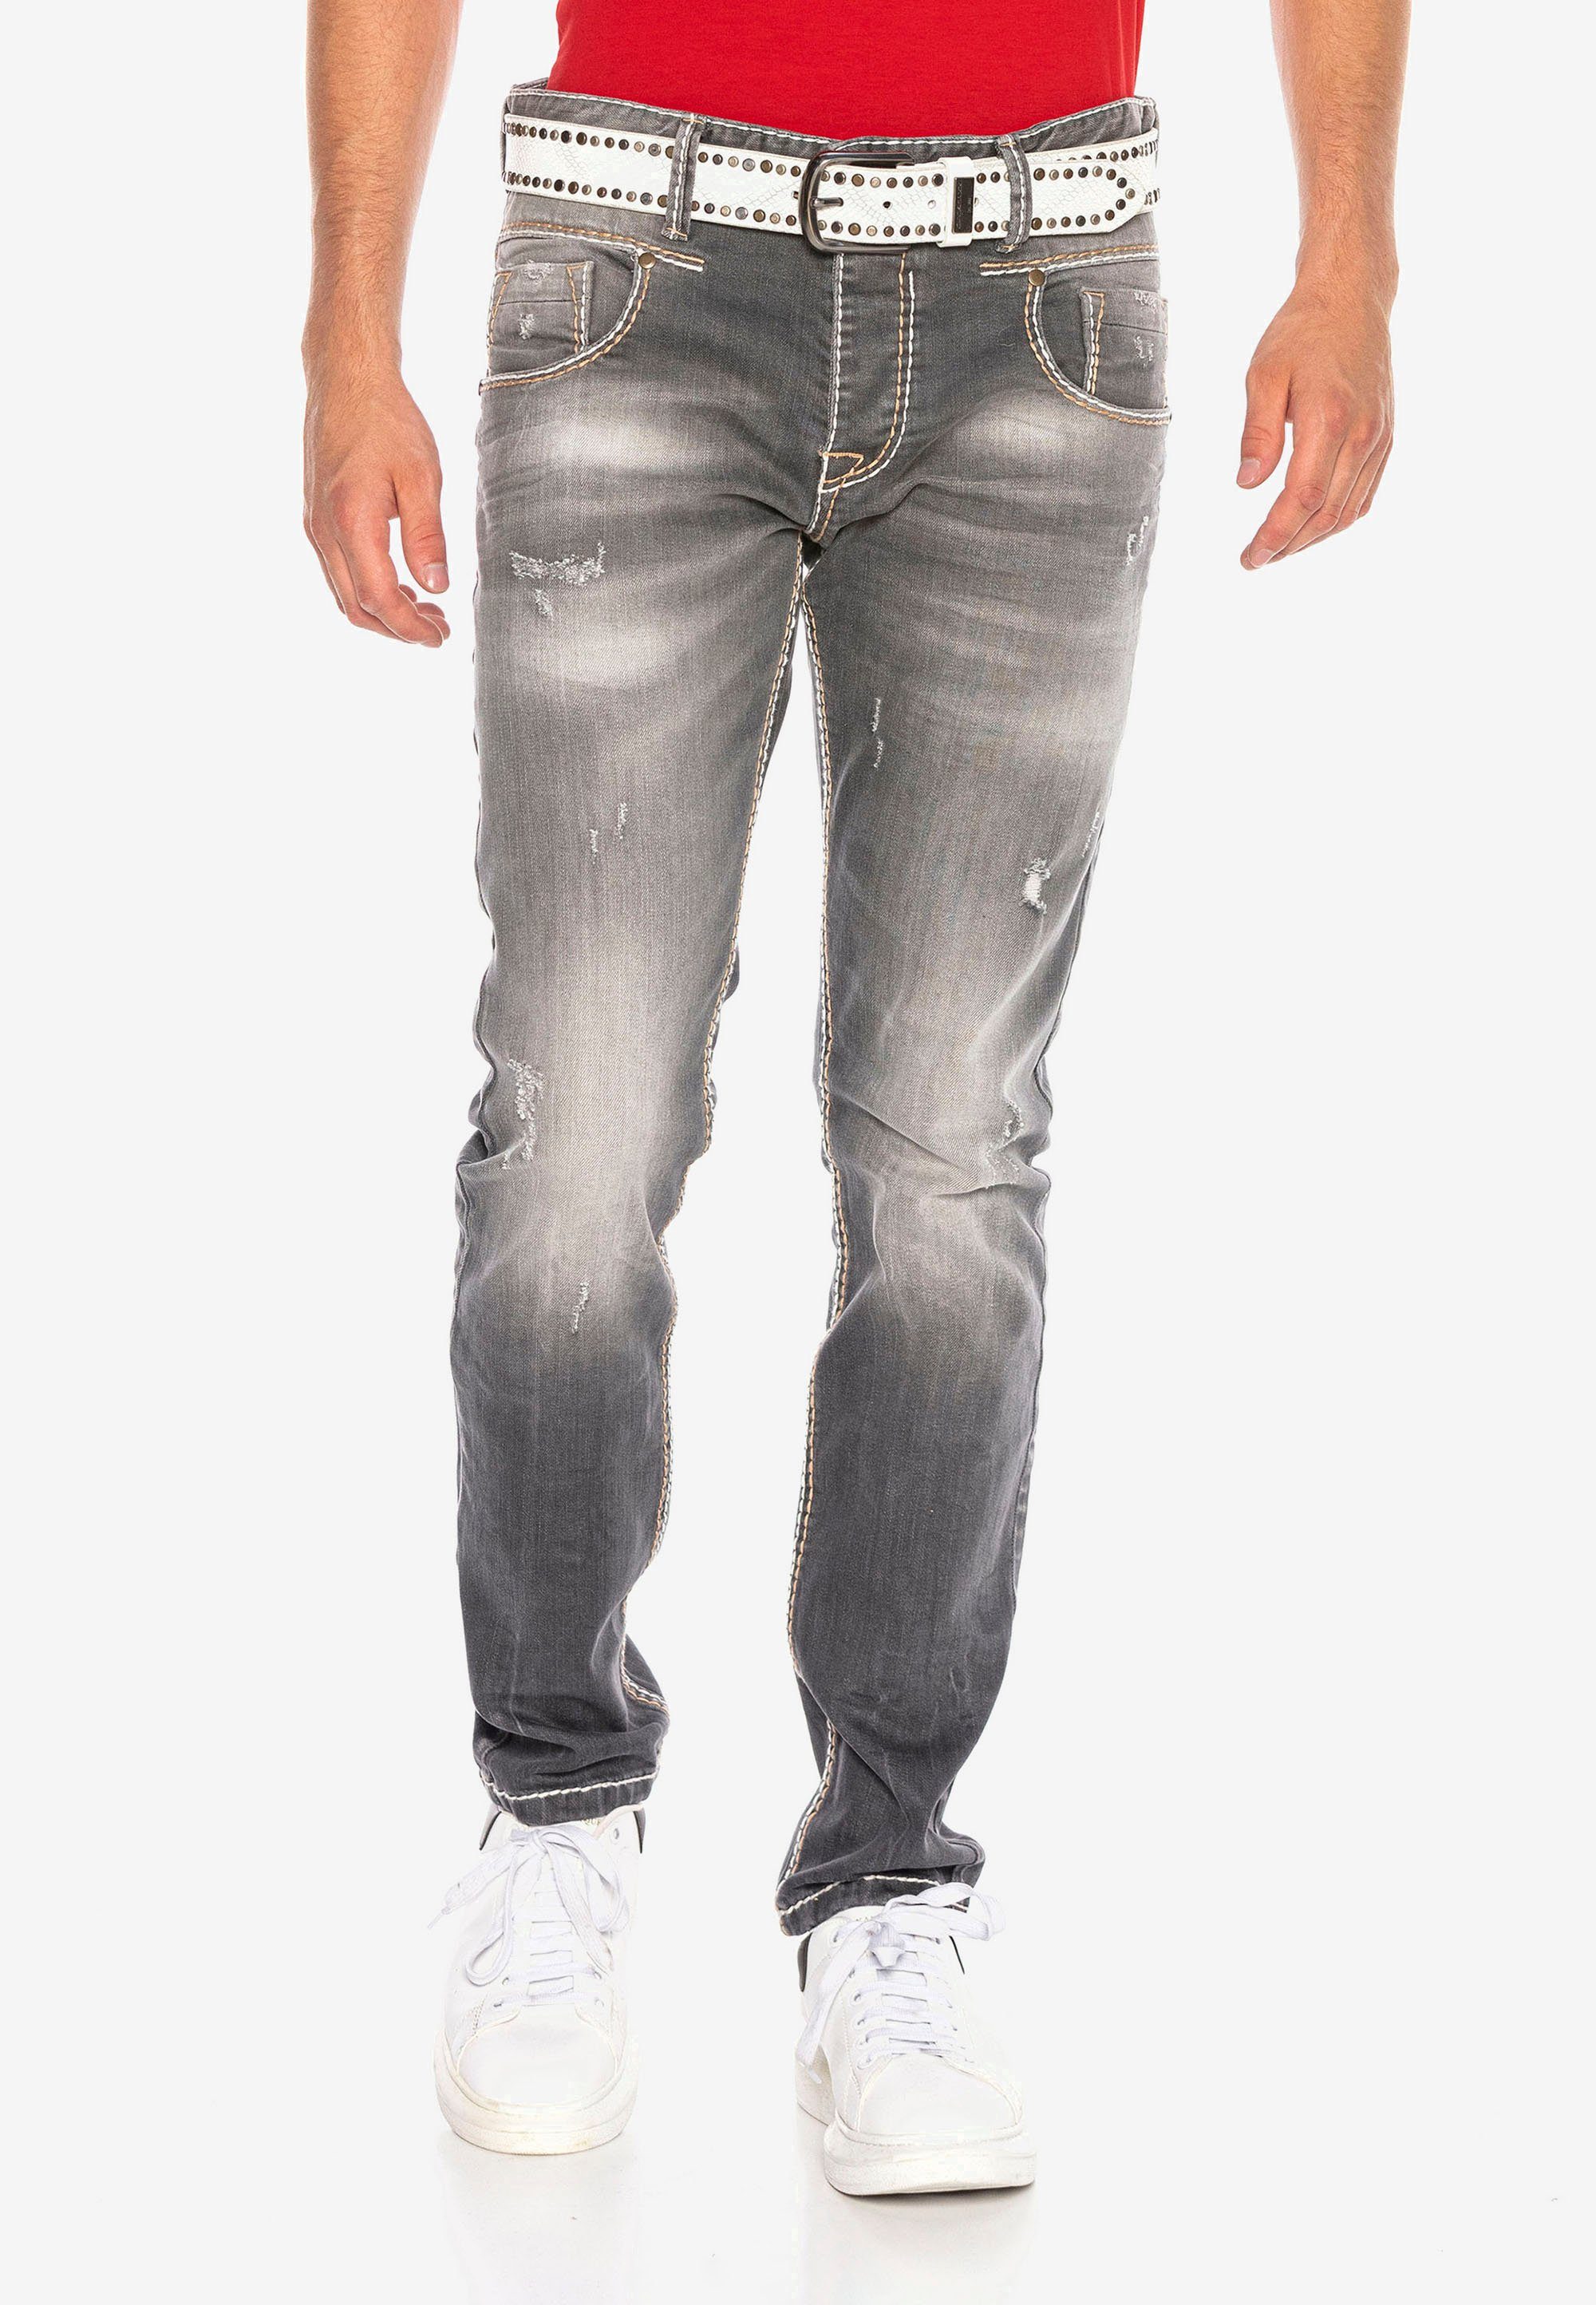 Cipo & Baxx in CD668 Bequeme Fit-Schnitt Jeans modernem Straight